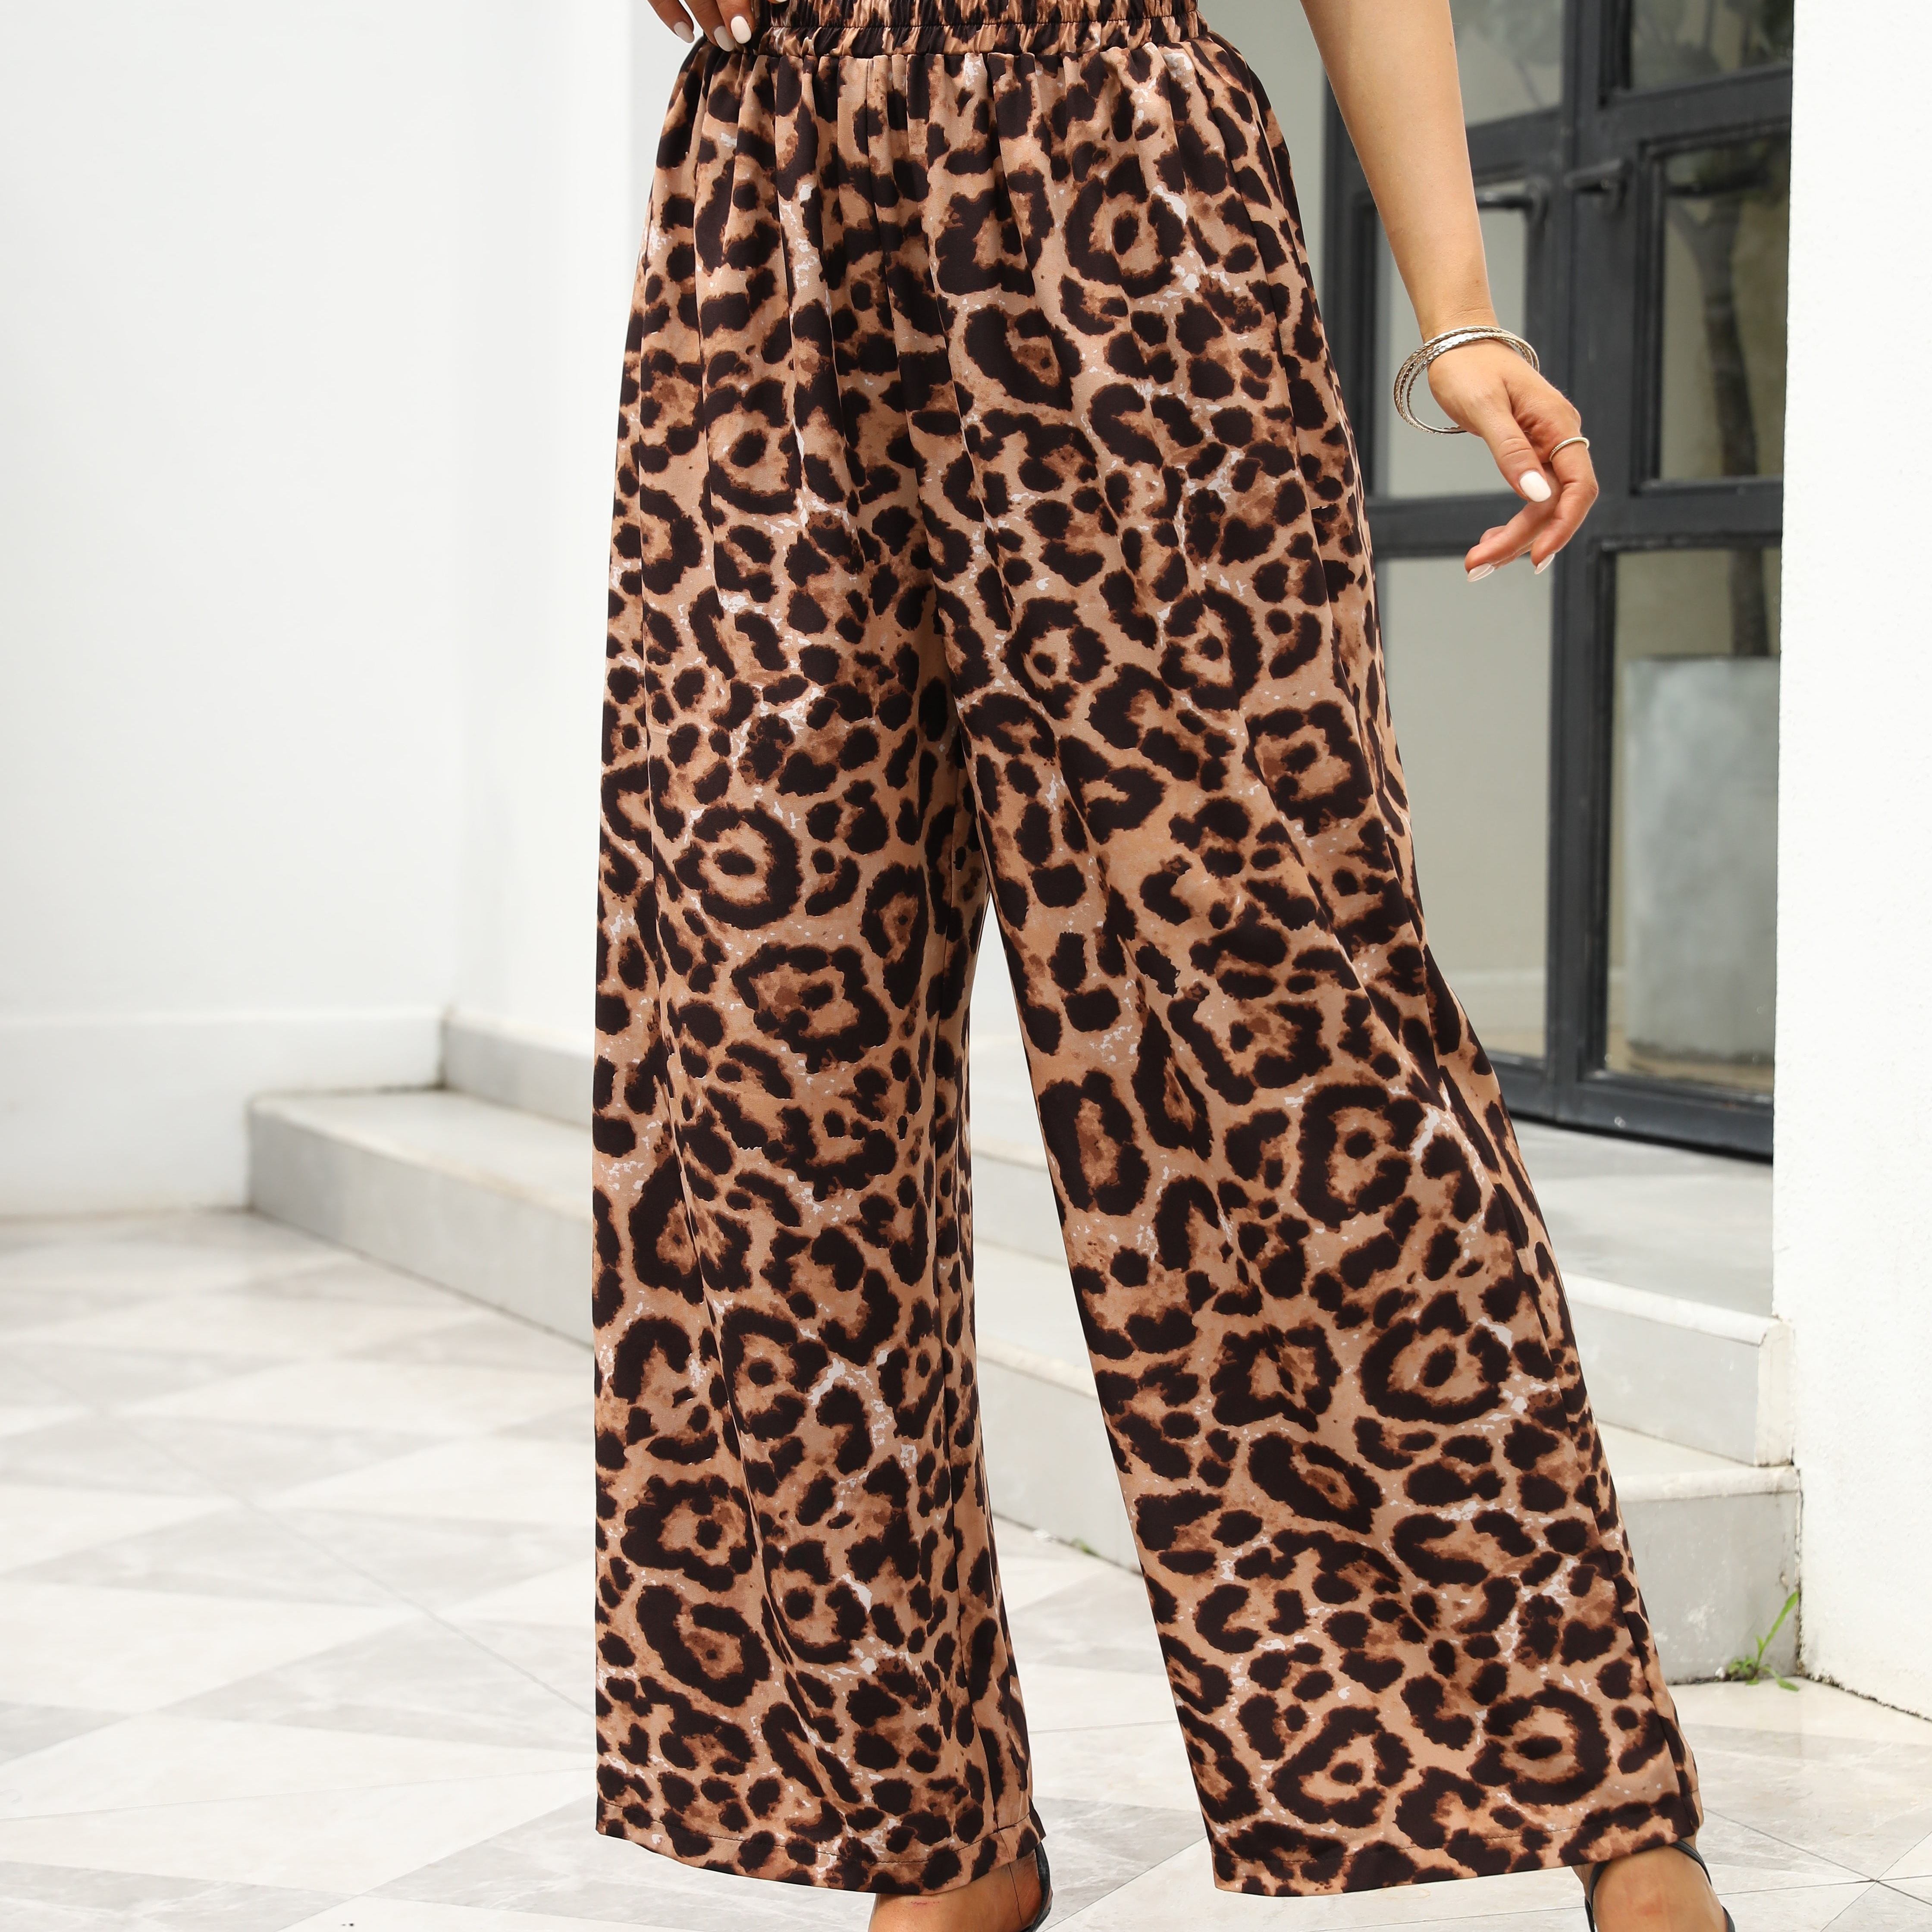 Taking Shape Womens Size 14 Animal Print Blush Linen Blend Stretch Pants(s)